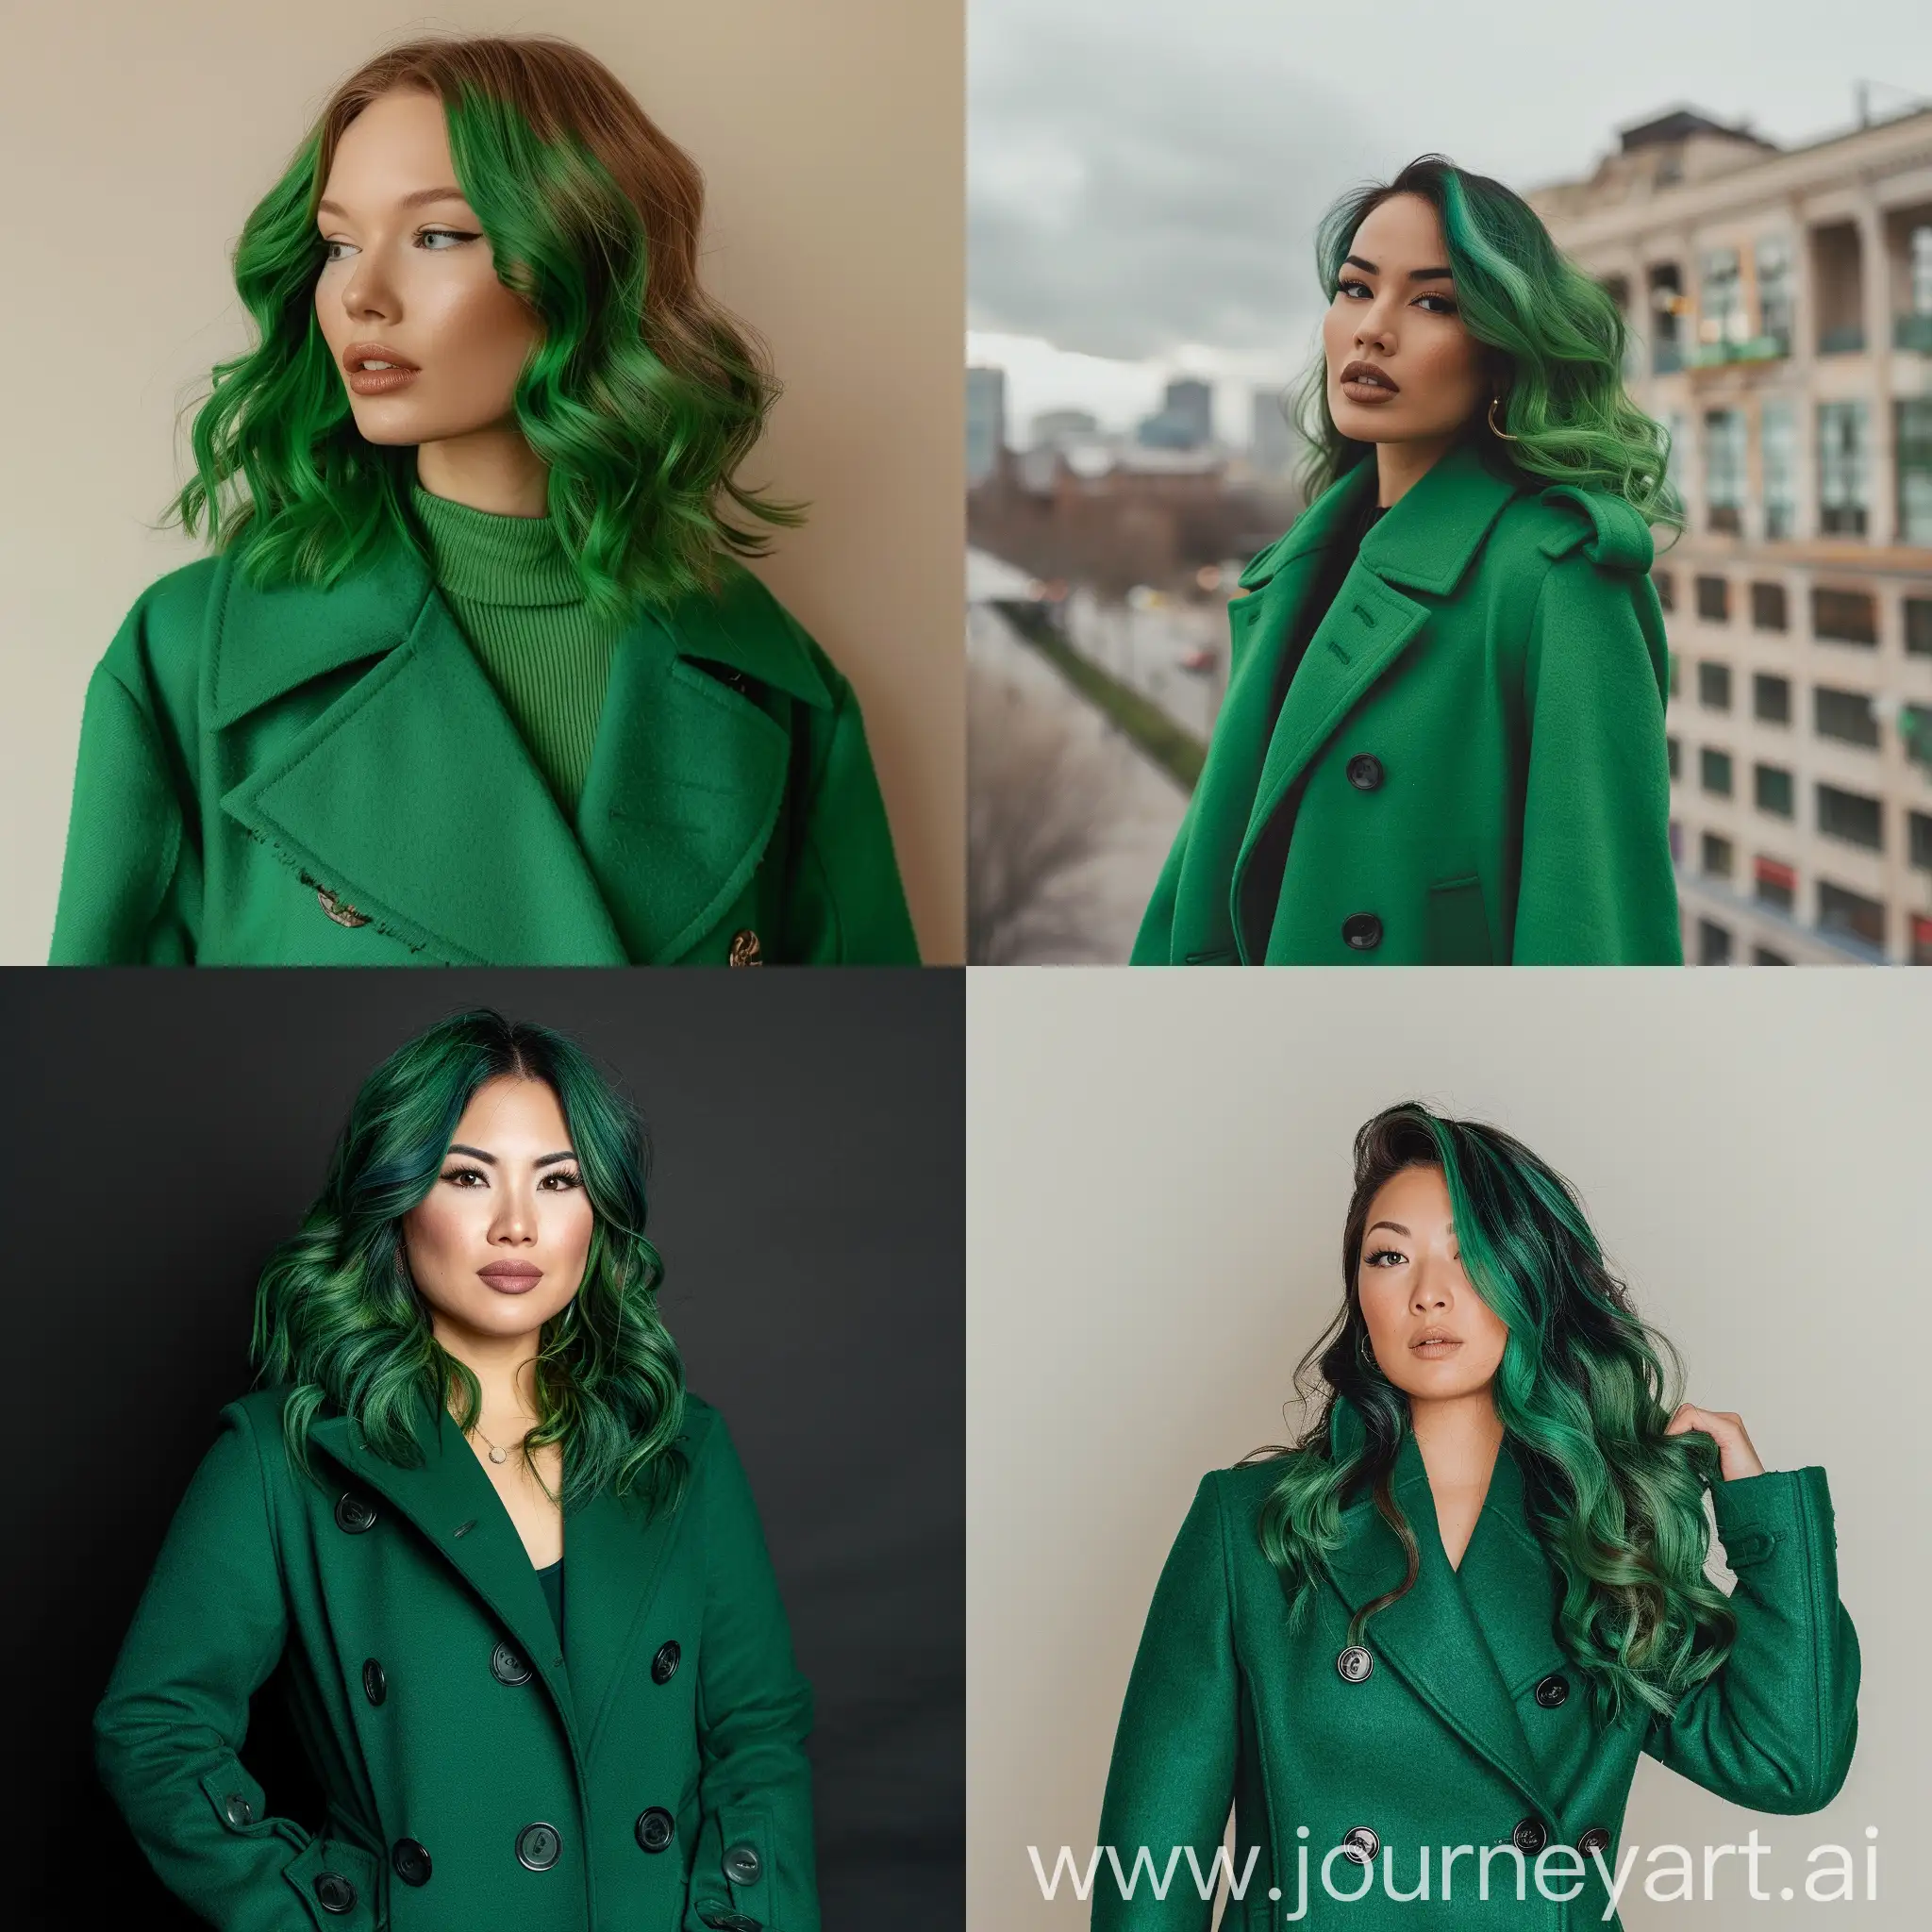 Confident-Women-in-Green-Coats-Stylish-Fashion-Statement